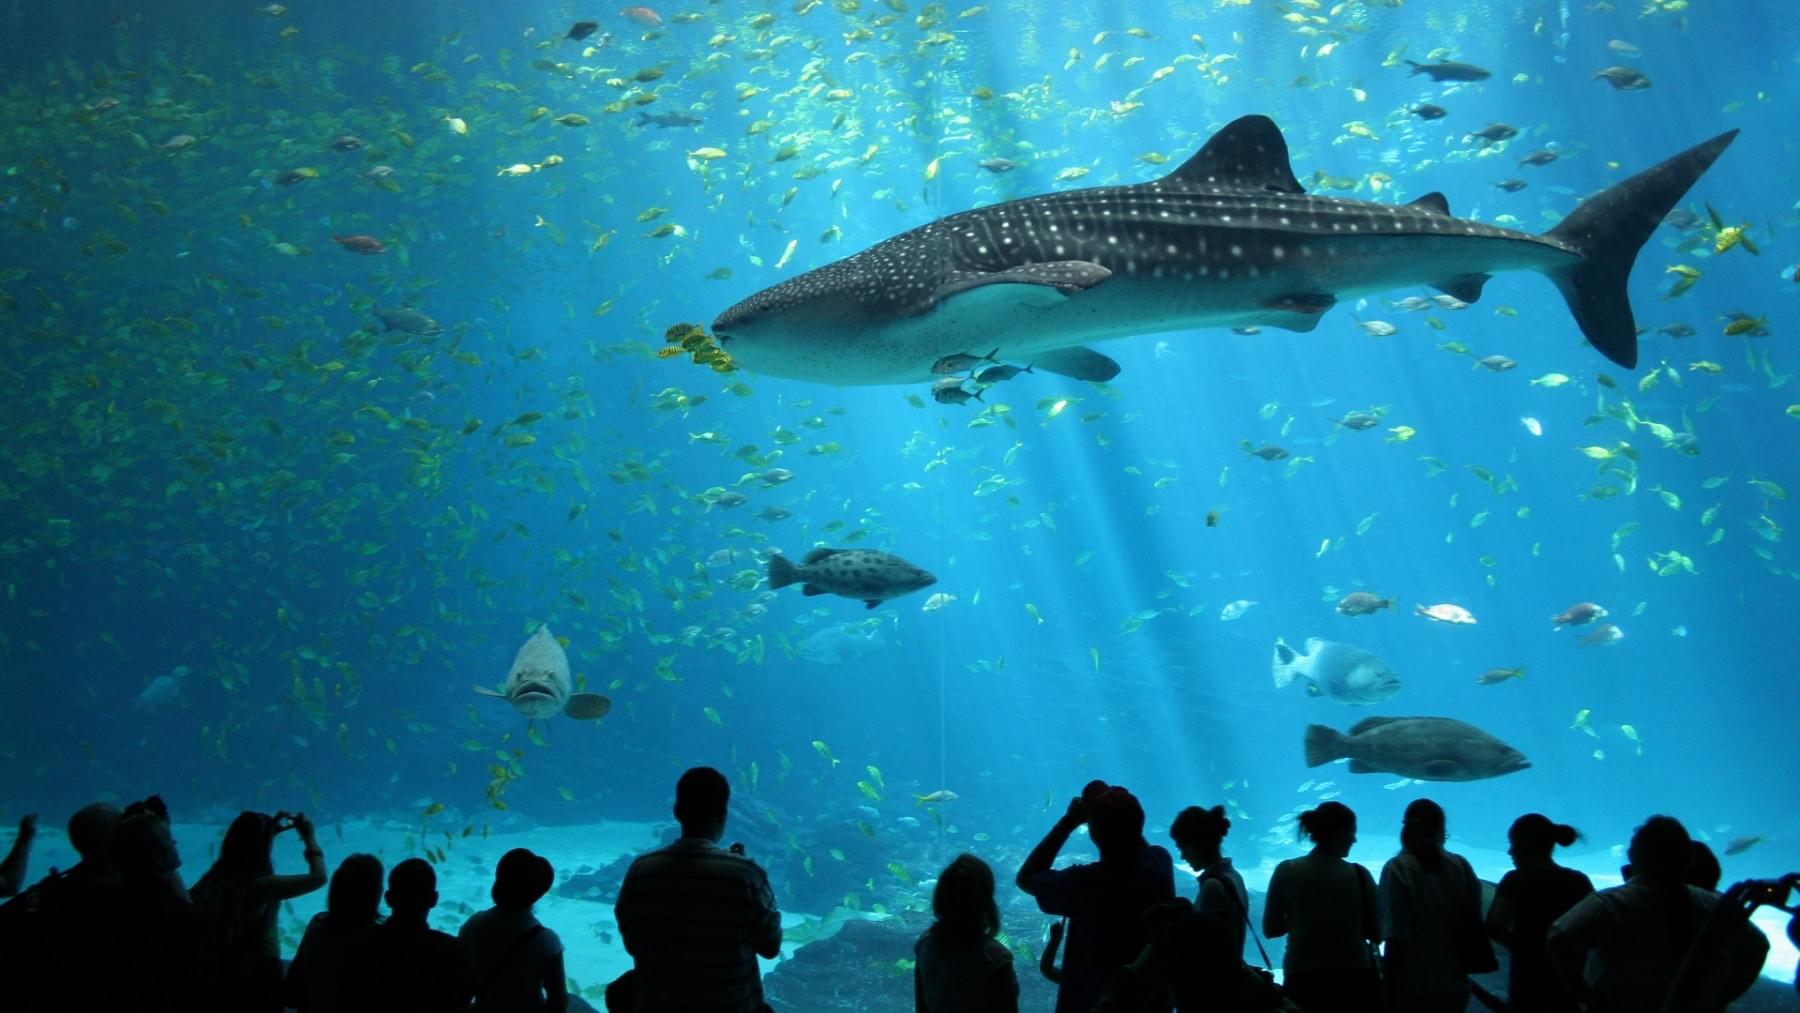 What's Inside  SEA LIFE Mall of America Aquarium